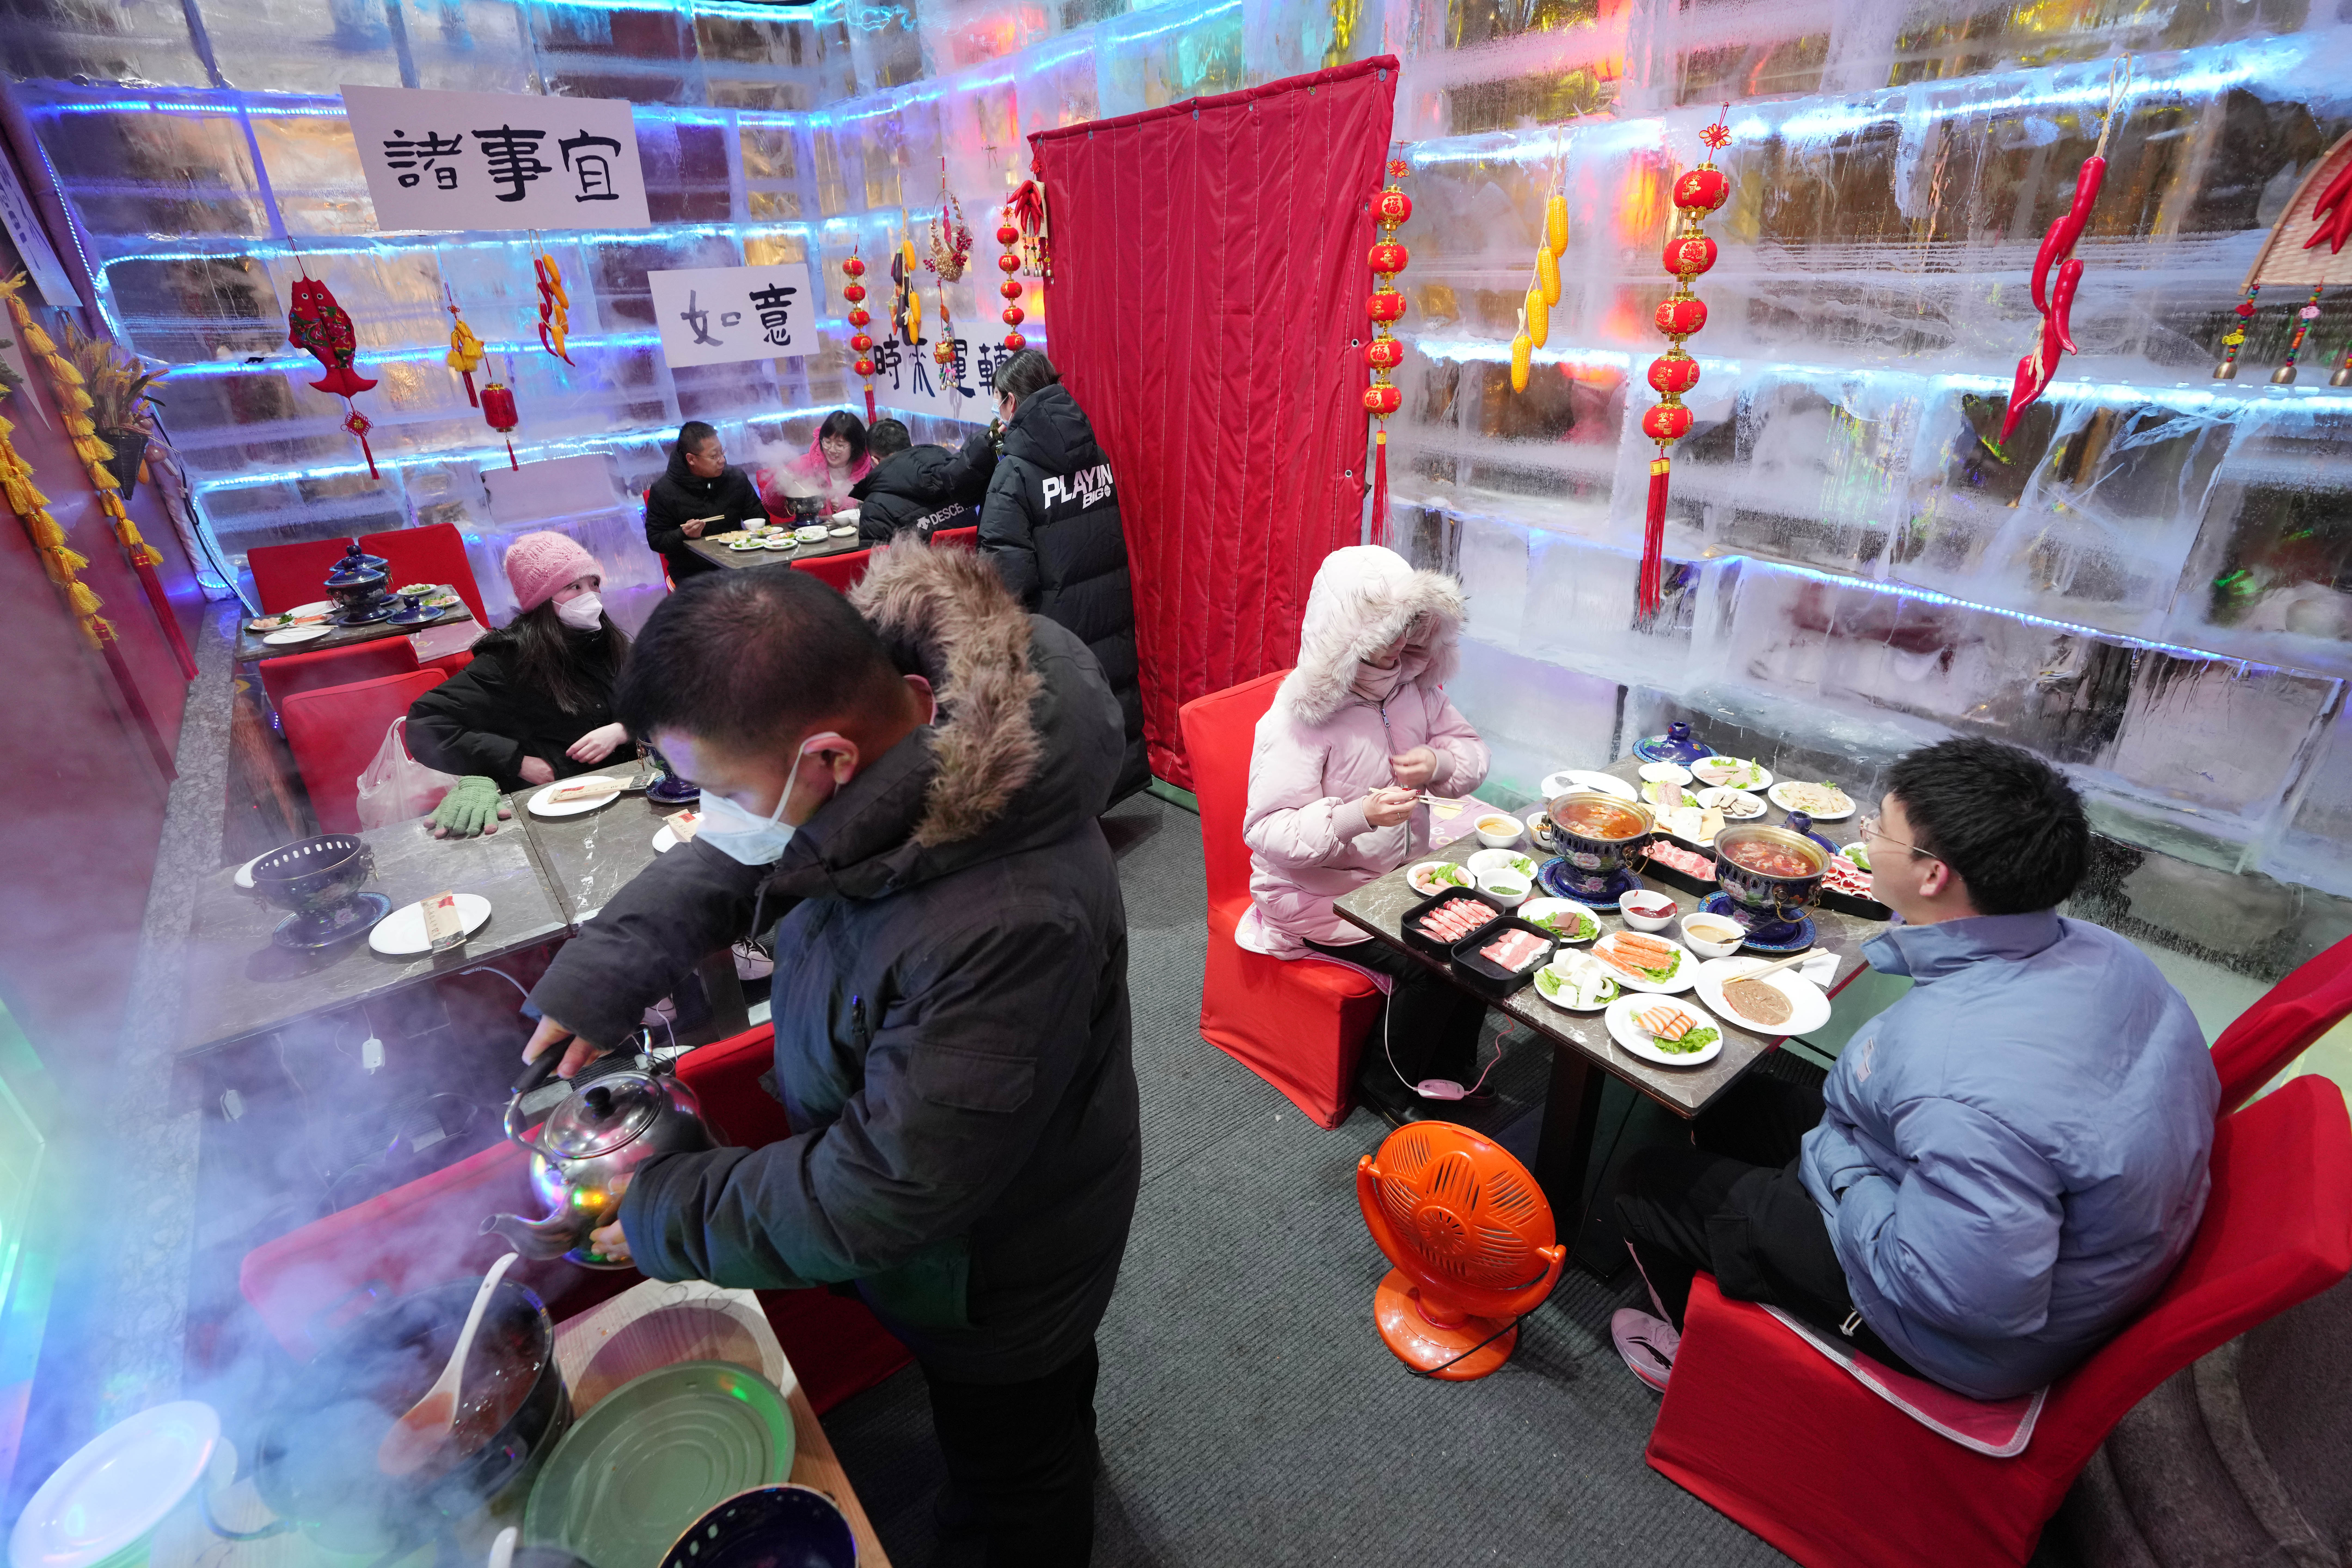 HARBIN, Sejumlah wisatawan menikmati hidangan hotpot di sebuah stan yang terbuat dari es di Central Street di Harbin, Provinsi Heilongjiang, China timur laut, pada 28 Januari 2023. Sebuah pameran makanan dengan stan-stan yang terbuat dari es di Central Street menjadi tujuan wisata populer seiring pesatnya perkembangan pariwisata es dan salju di Harbin. (Xinhua/Wang Jianwei)